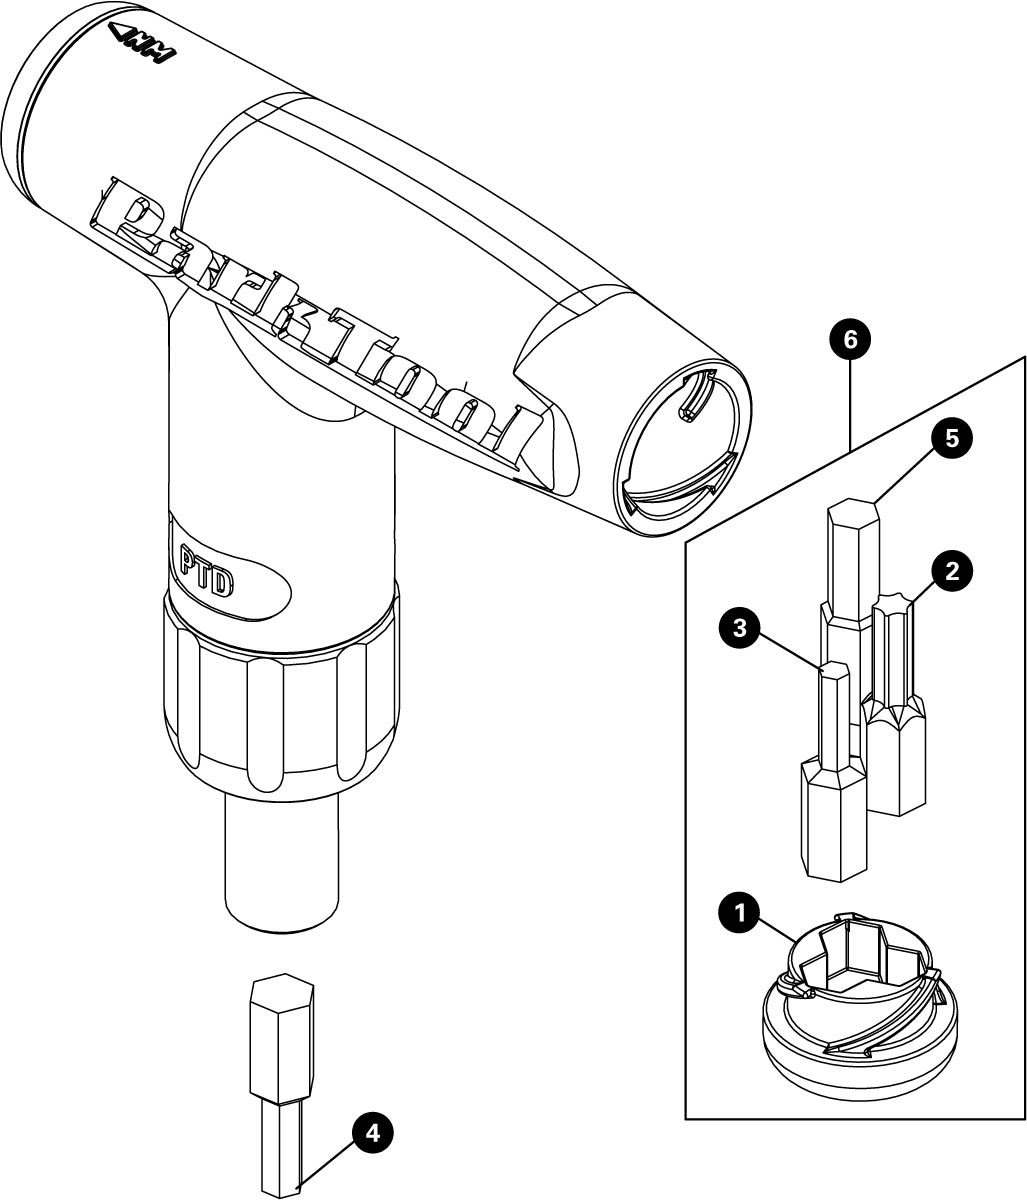 Parts diagram for PTD-5 Preset Torque Driver — 5 Nm, enlarged